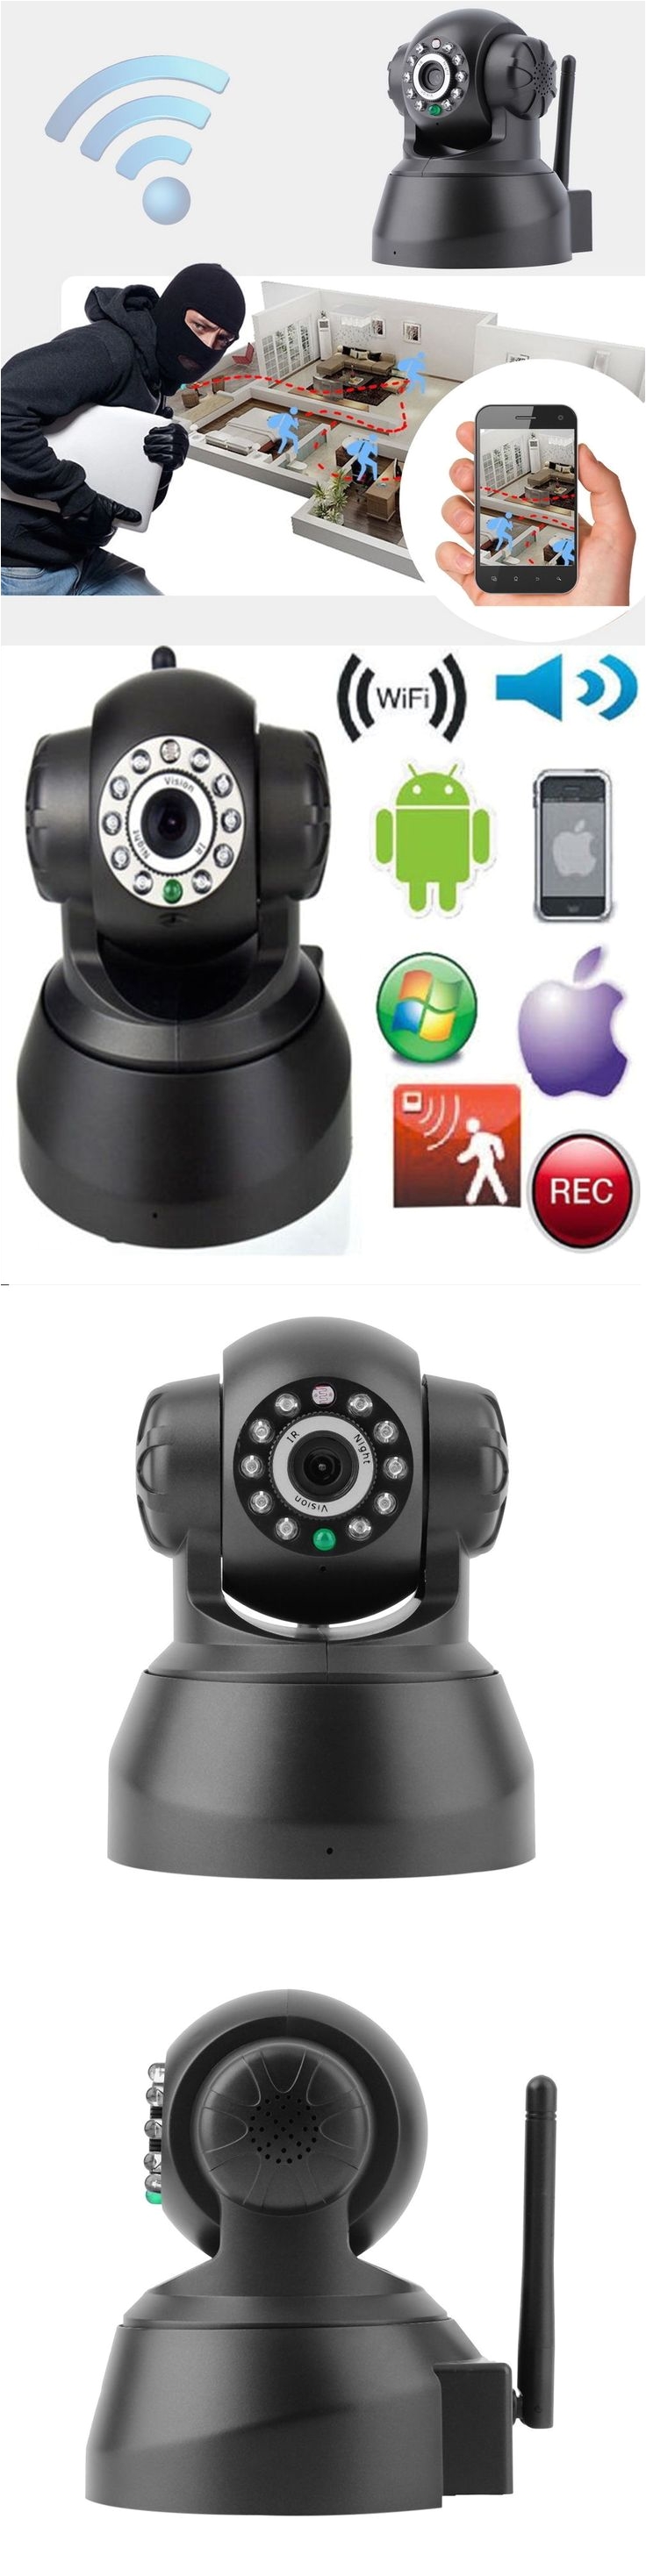 security cameras 1pc sricam 3mp 1080p wireless ip camera wifi security night vision cam us